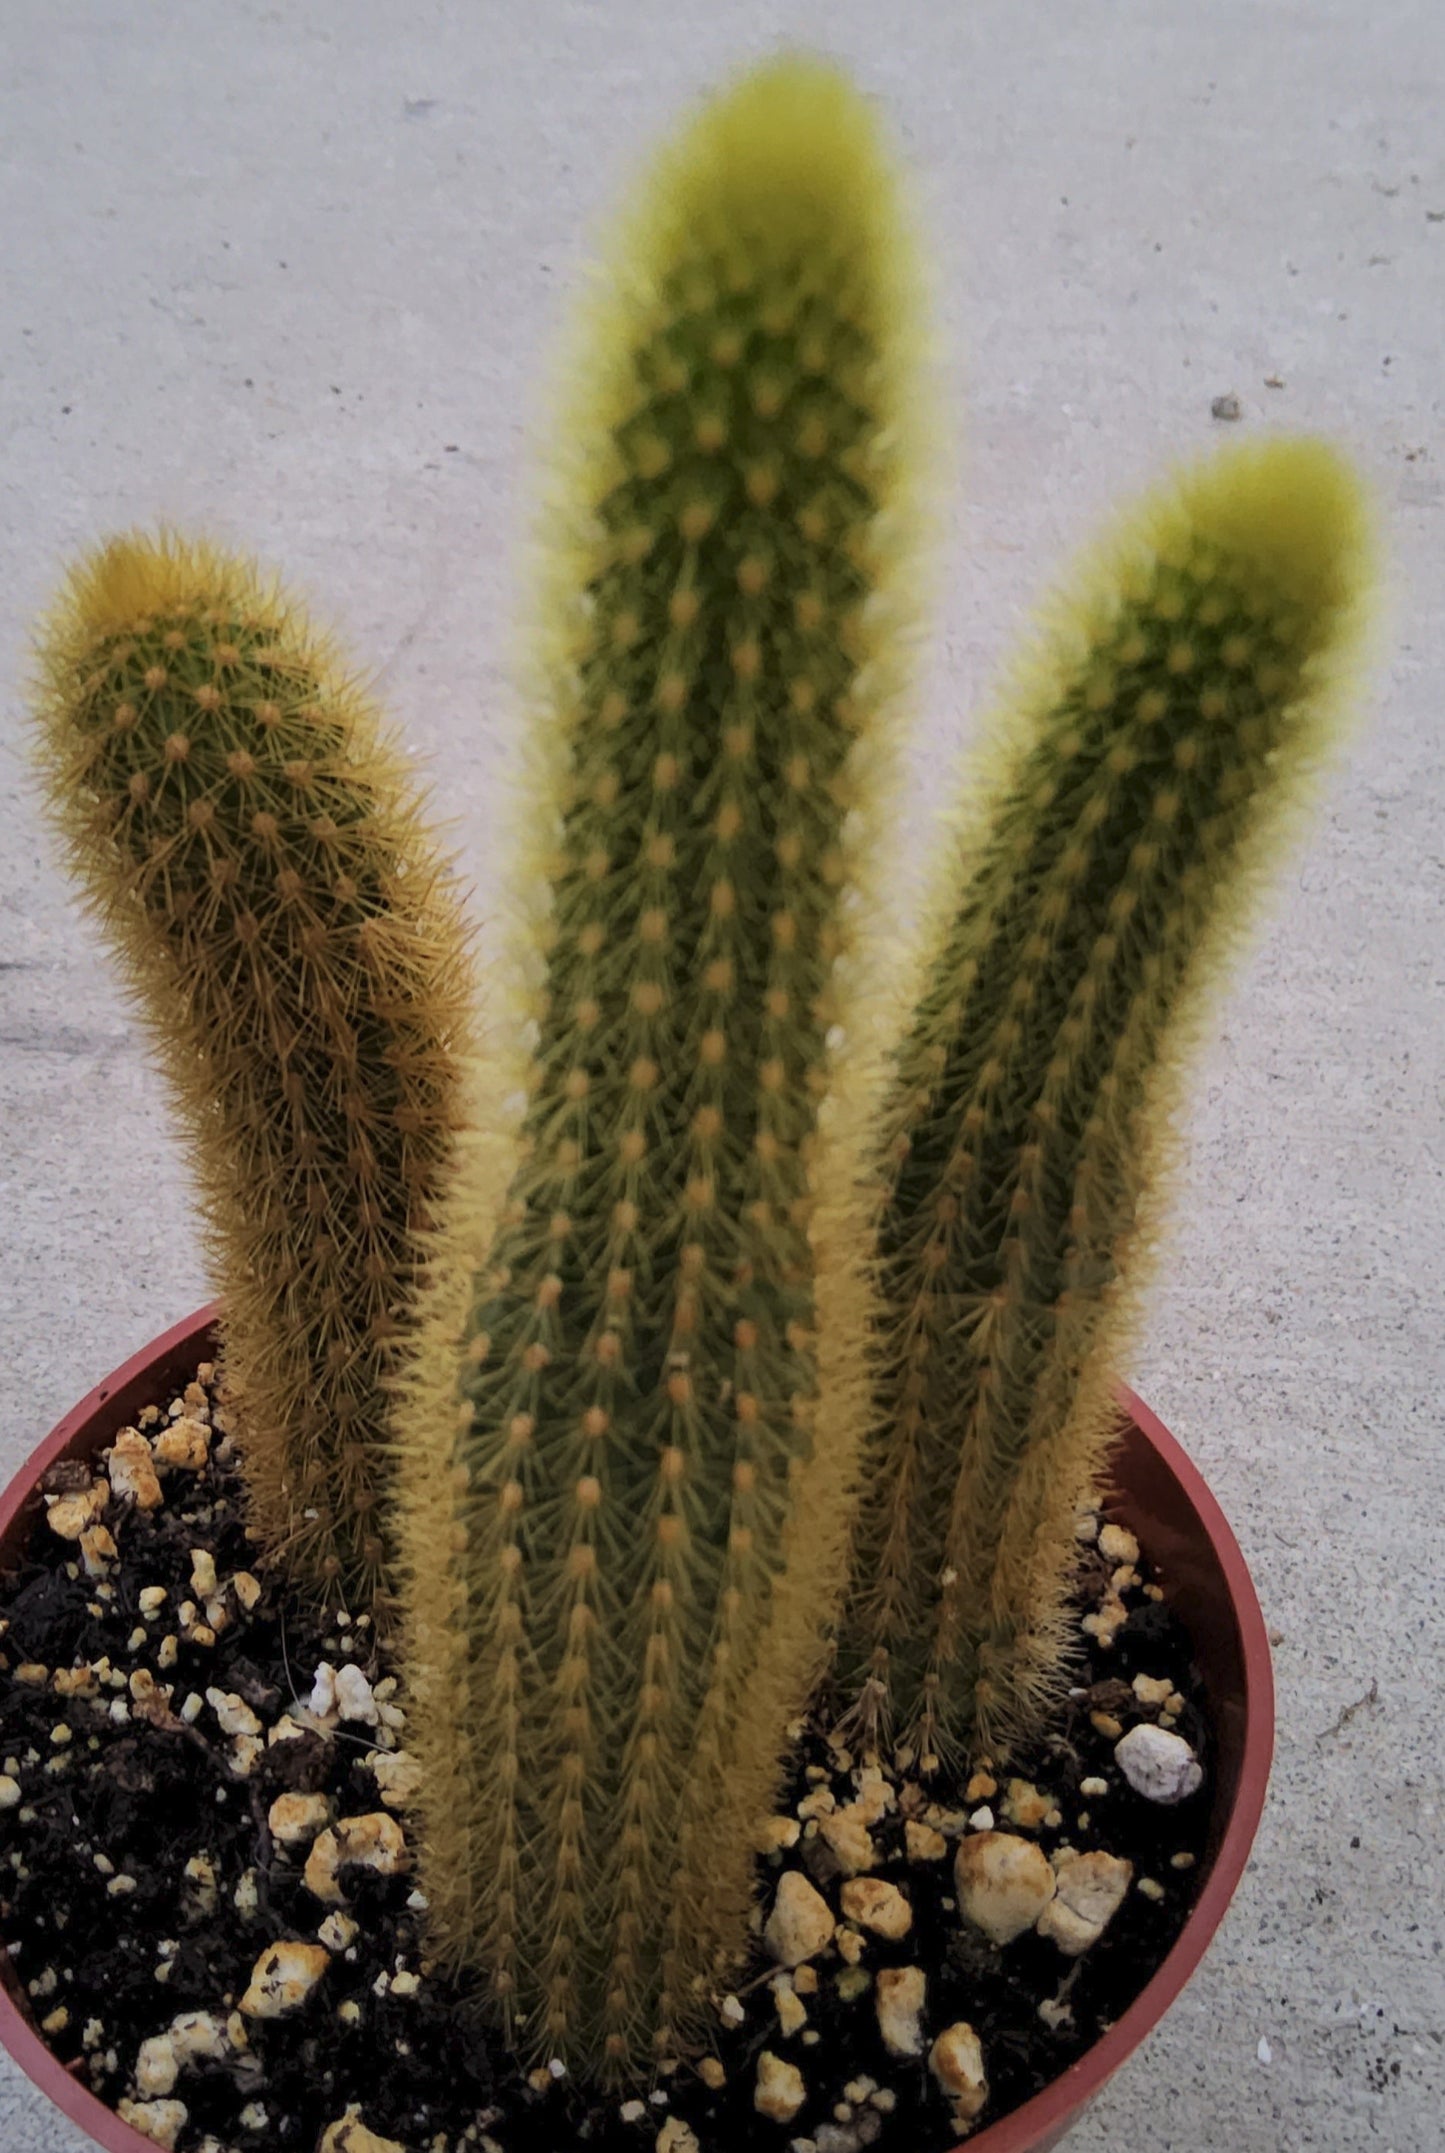 Cleistocactus winteri aka Golden Rat Tail Live Cactus Growing in 4 Inch